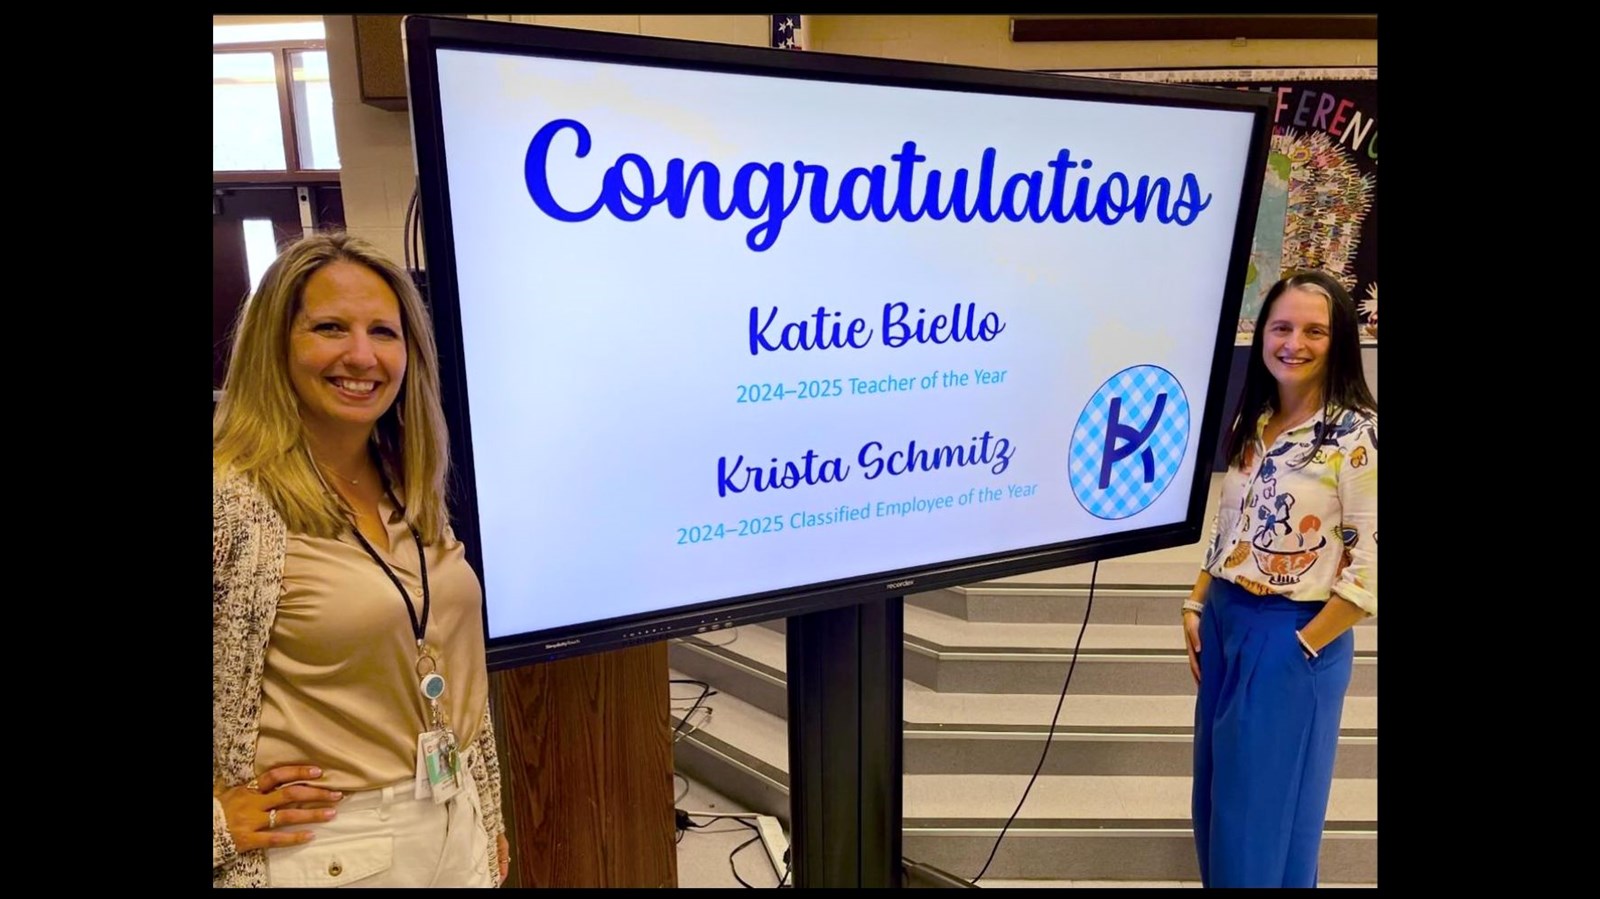 Large screen with Krista Schmitz and Katie Biello, Congratulations Katie Biello, 2024-2025 Teacher of the Year and Krista Schmitz, 2024-2025 Classified Employee of the Year